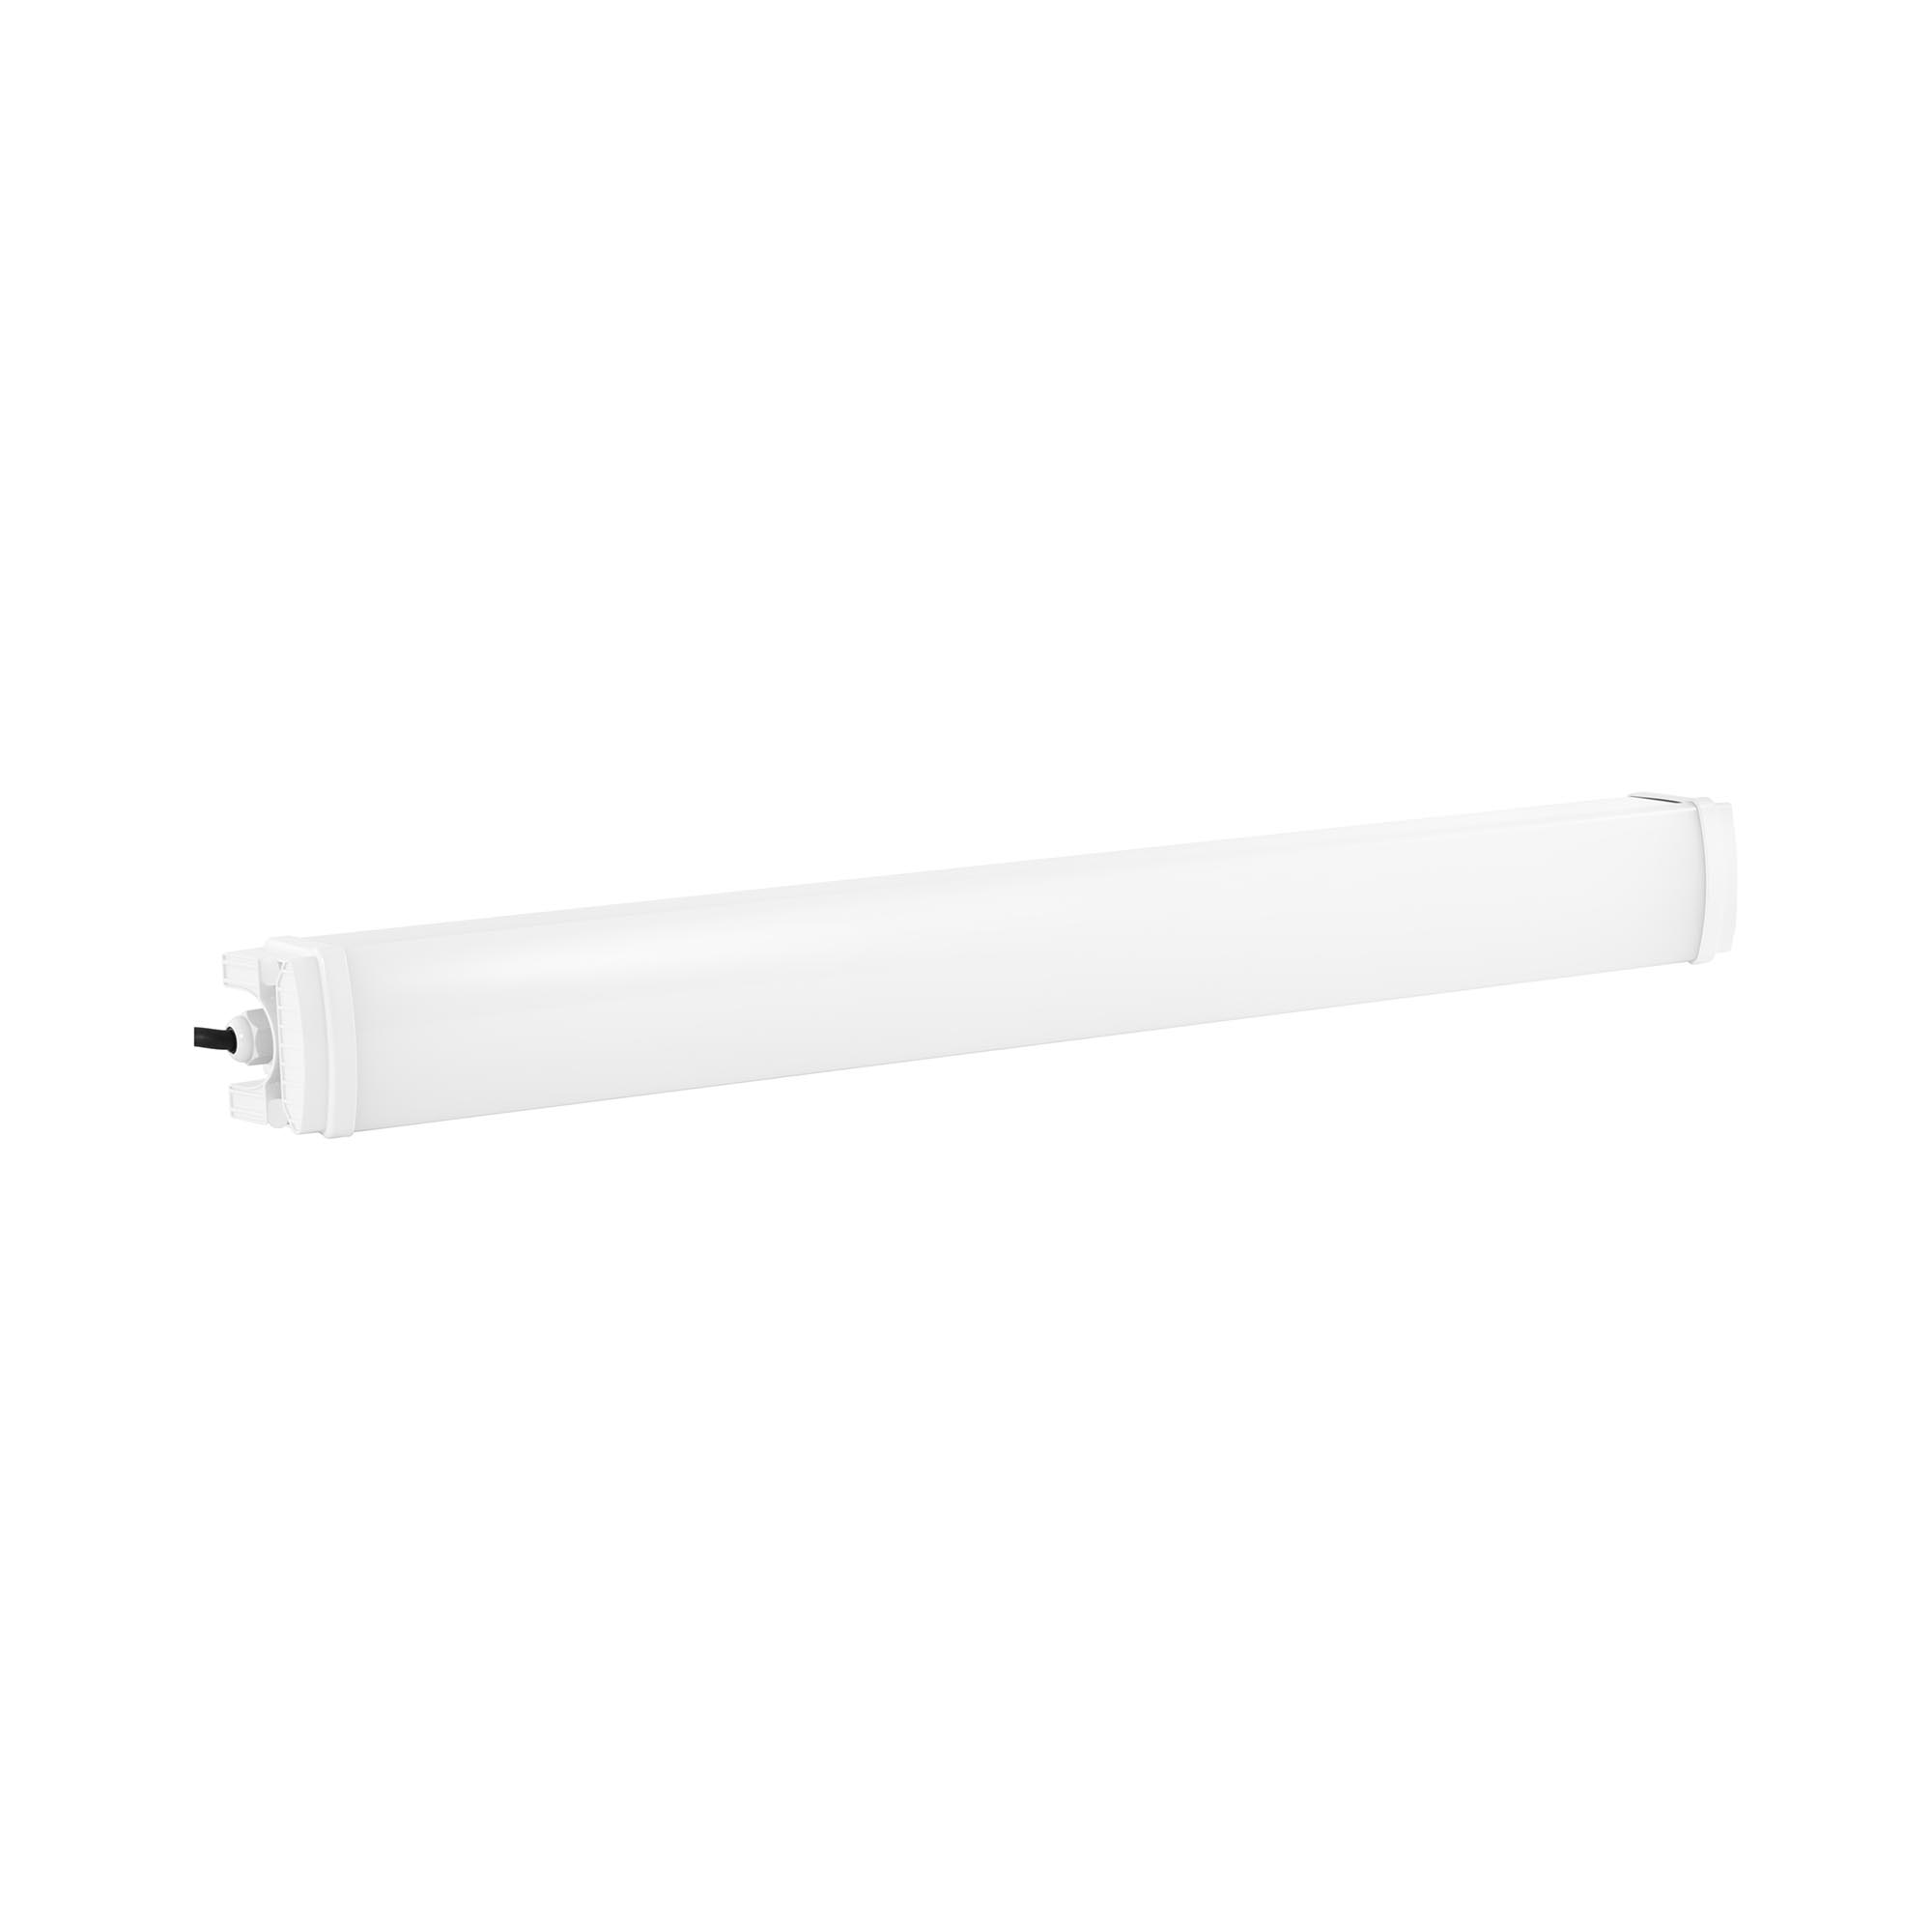 LED impermeabile - 40 W - 90 cm